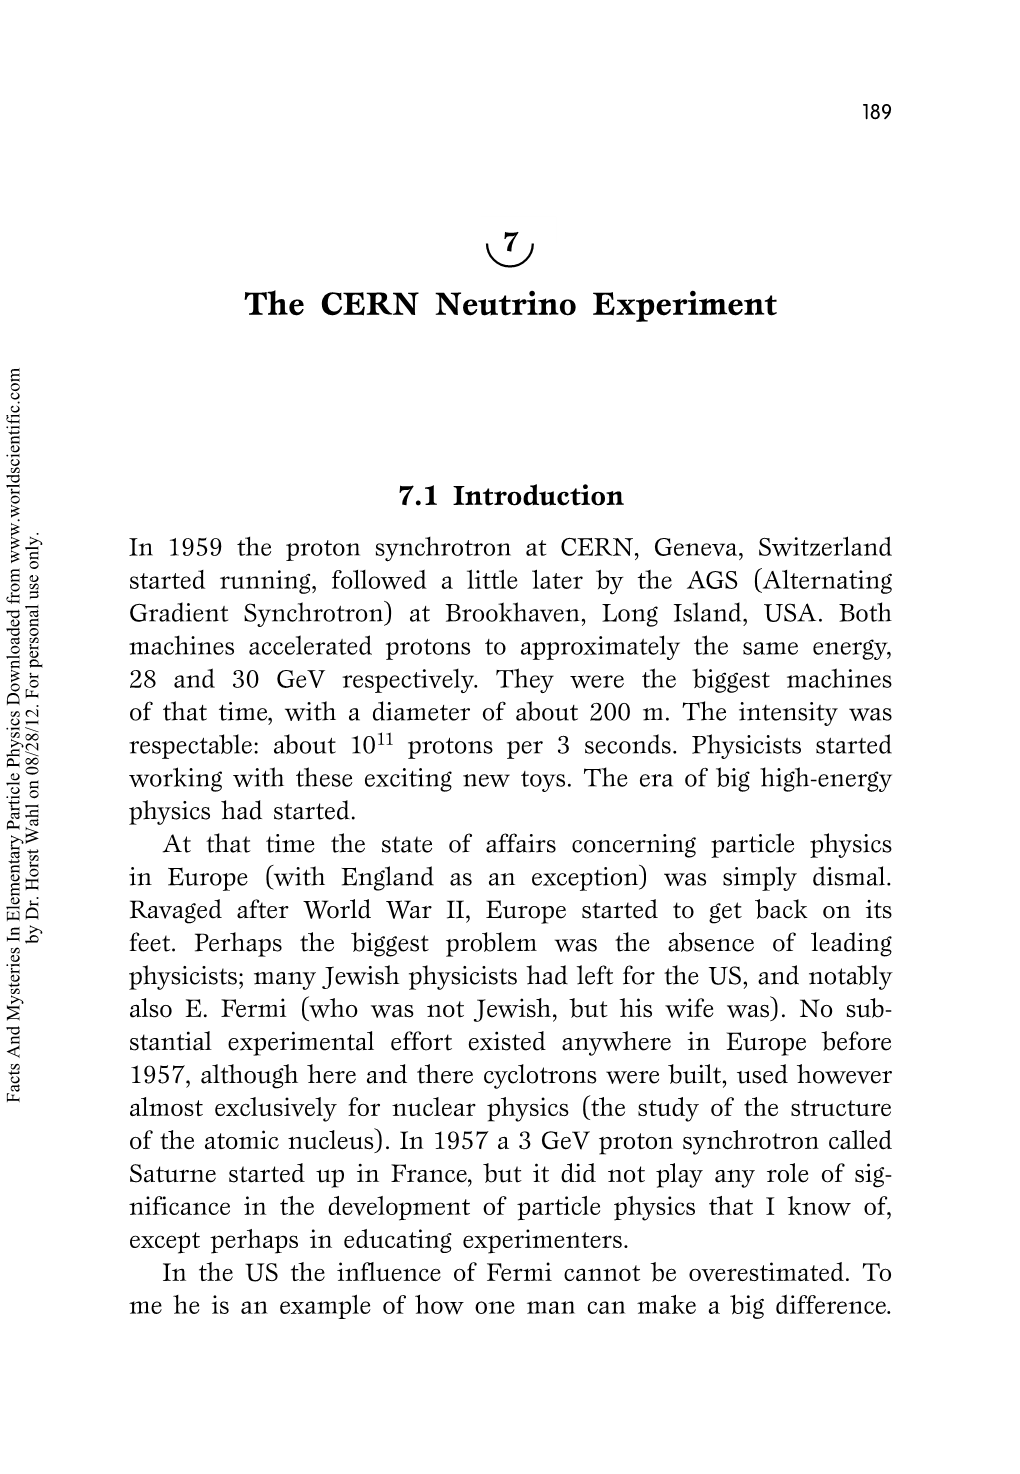 The CERN Neutrino Experiment